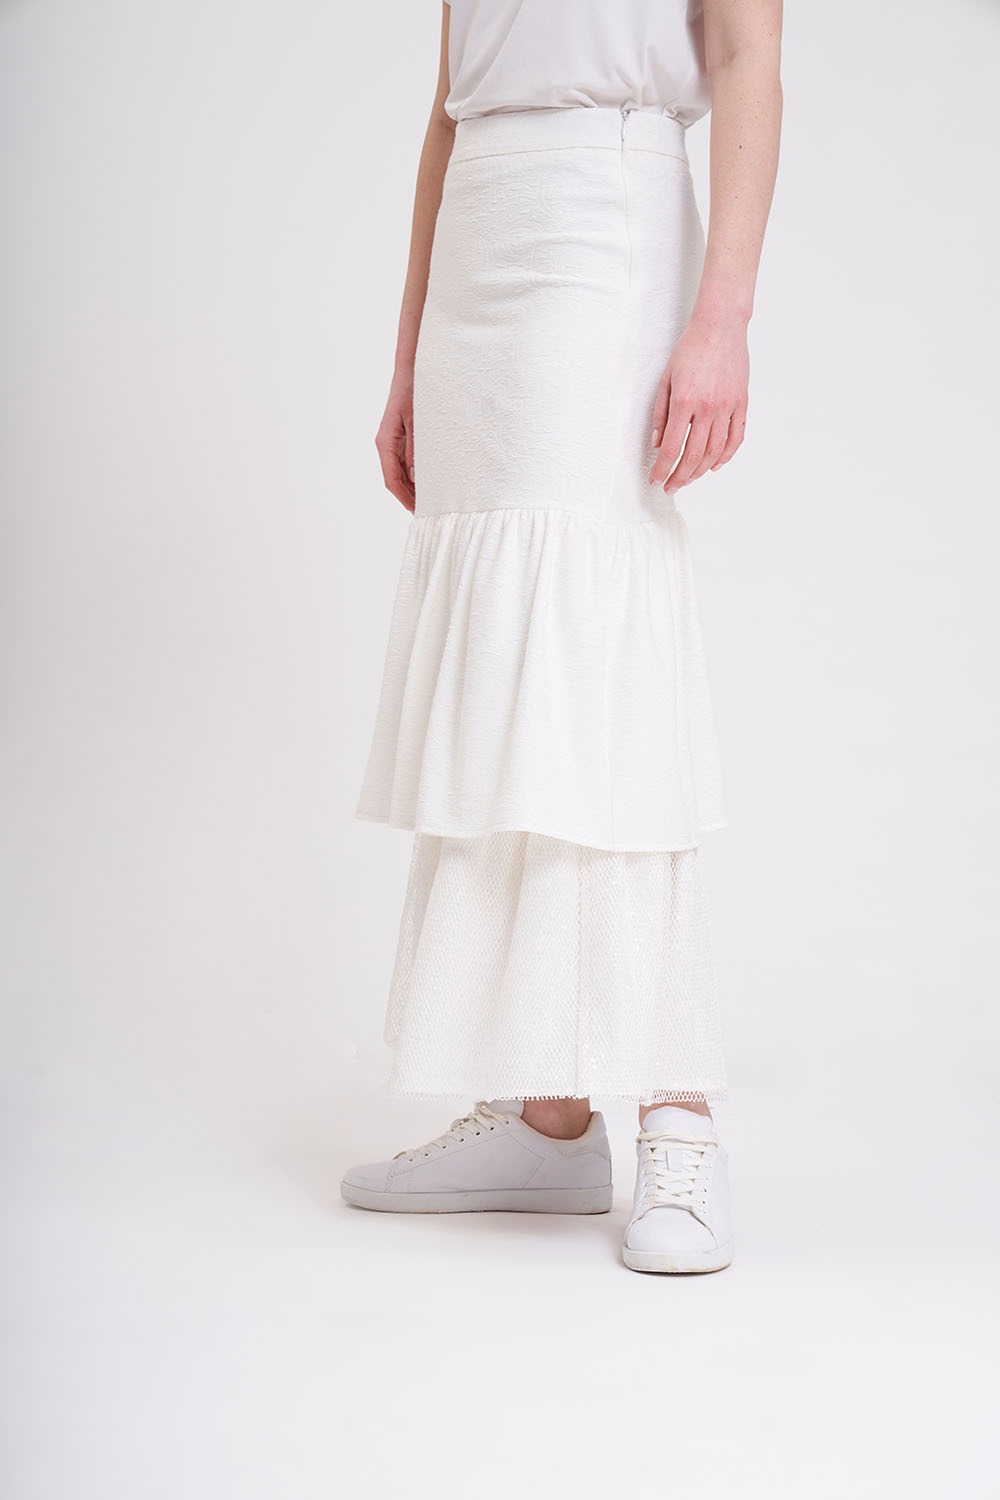 Jacquard Folded Skirt (Ecru)